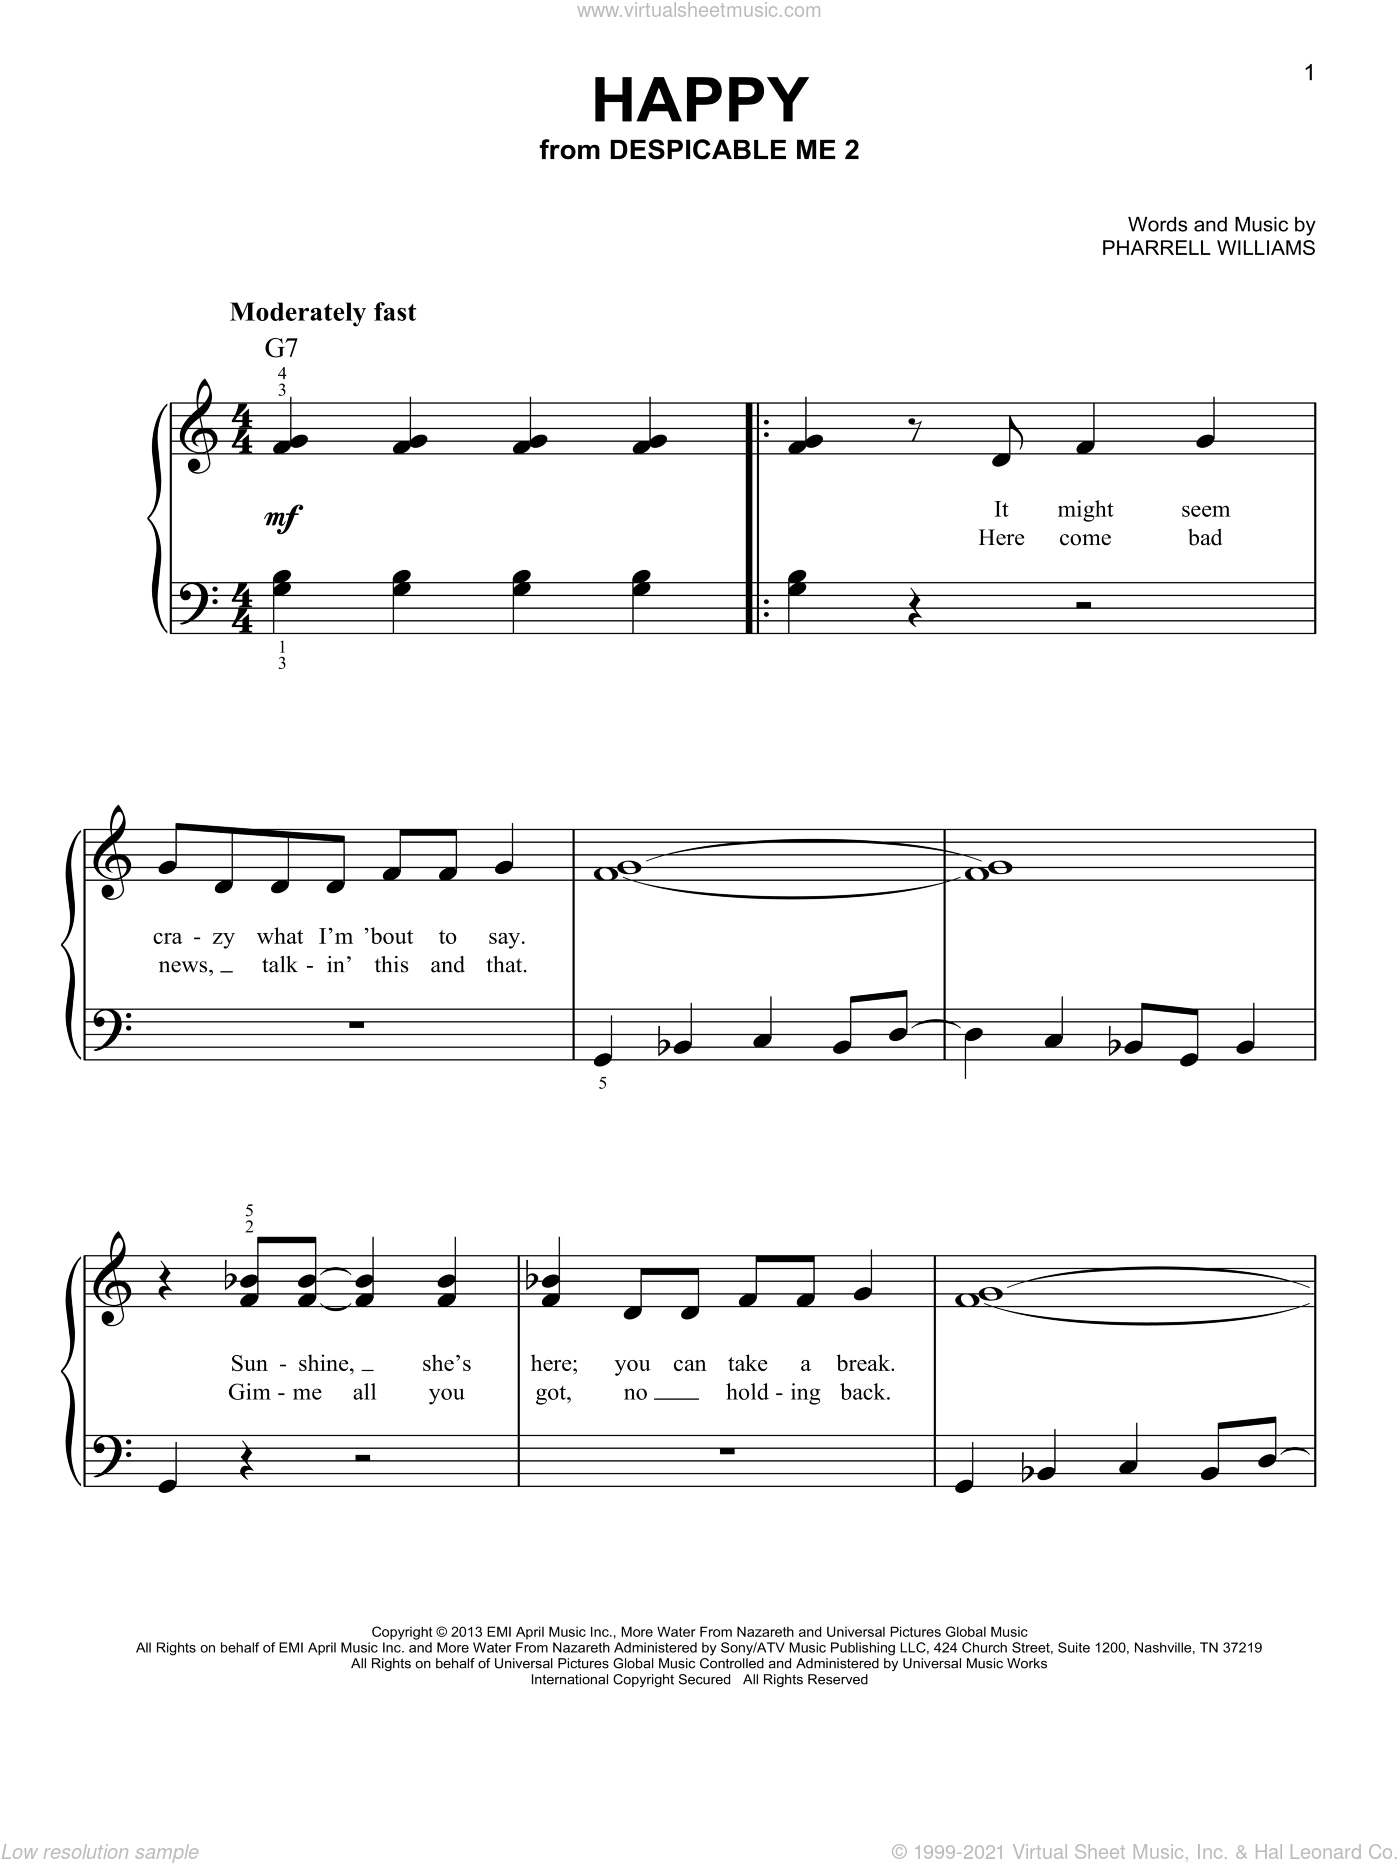 beginners-piano-sheet-music-www-inf-inet